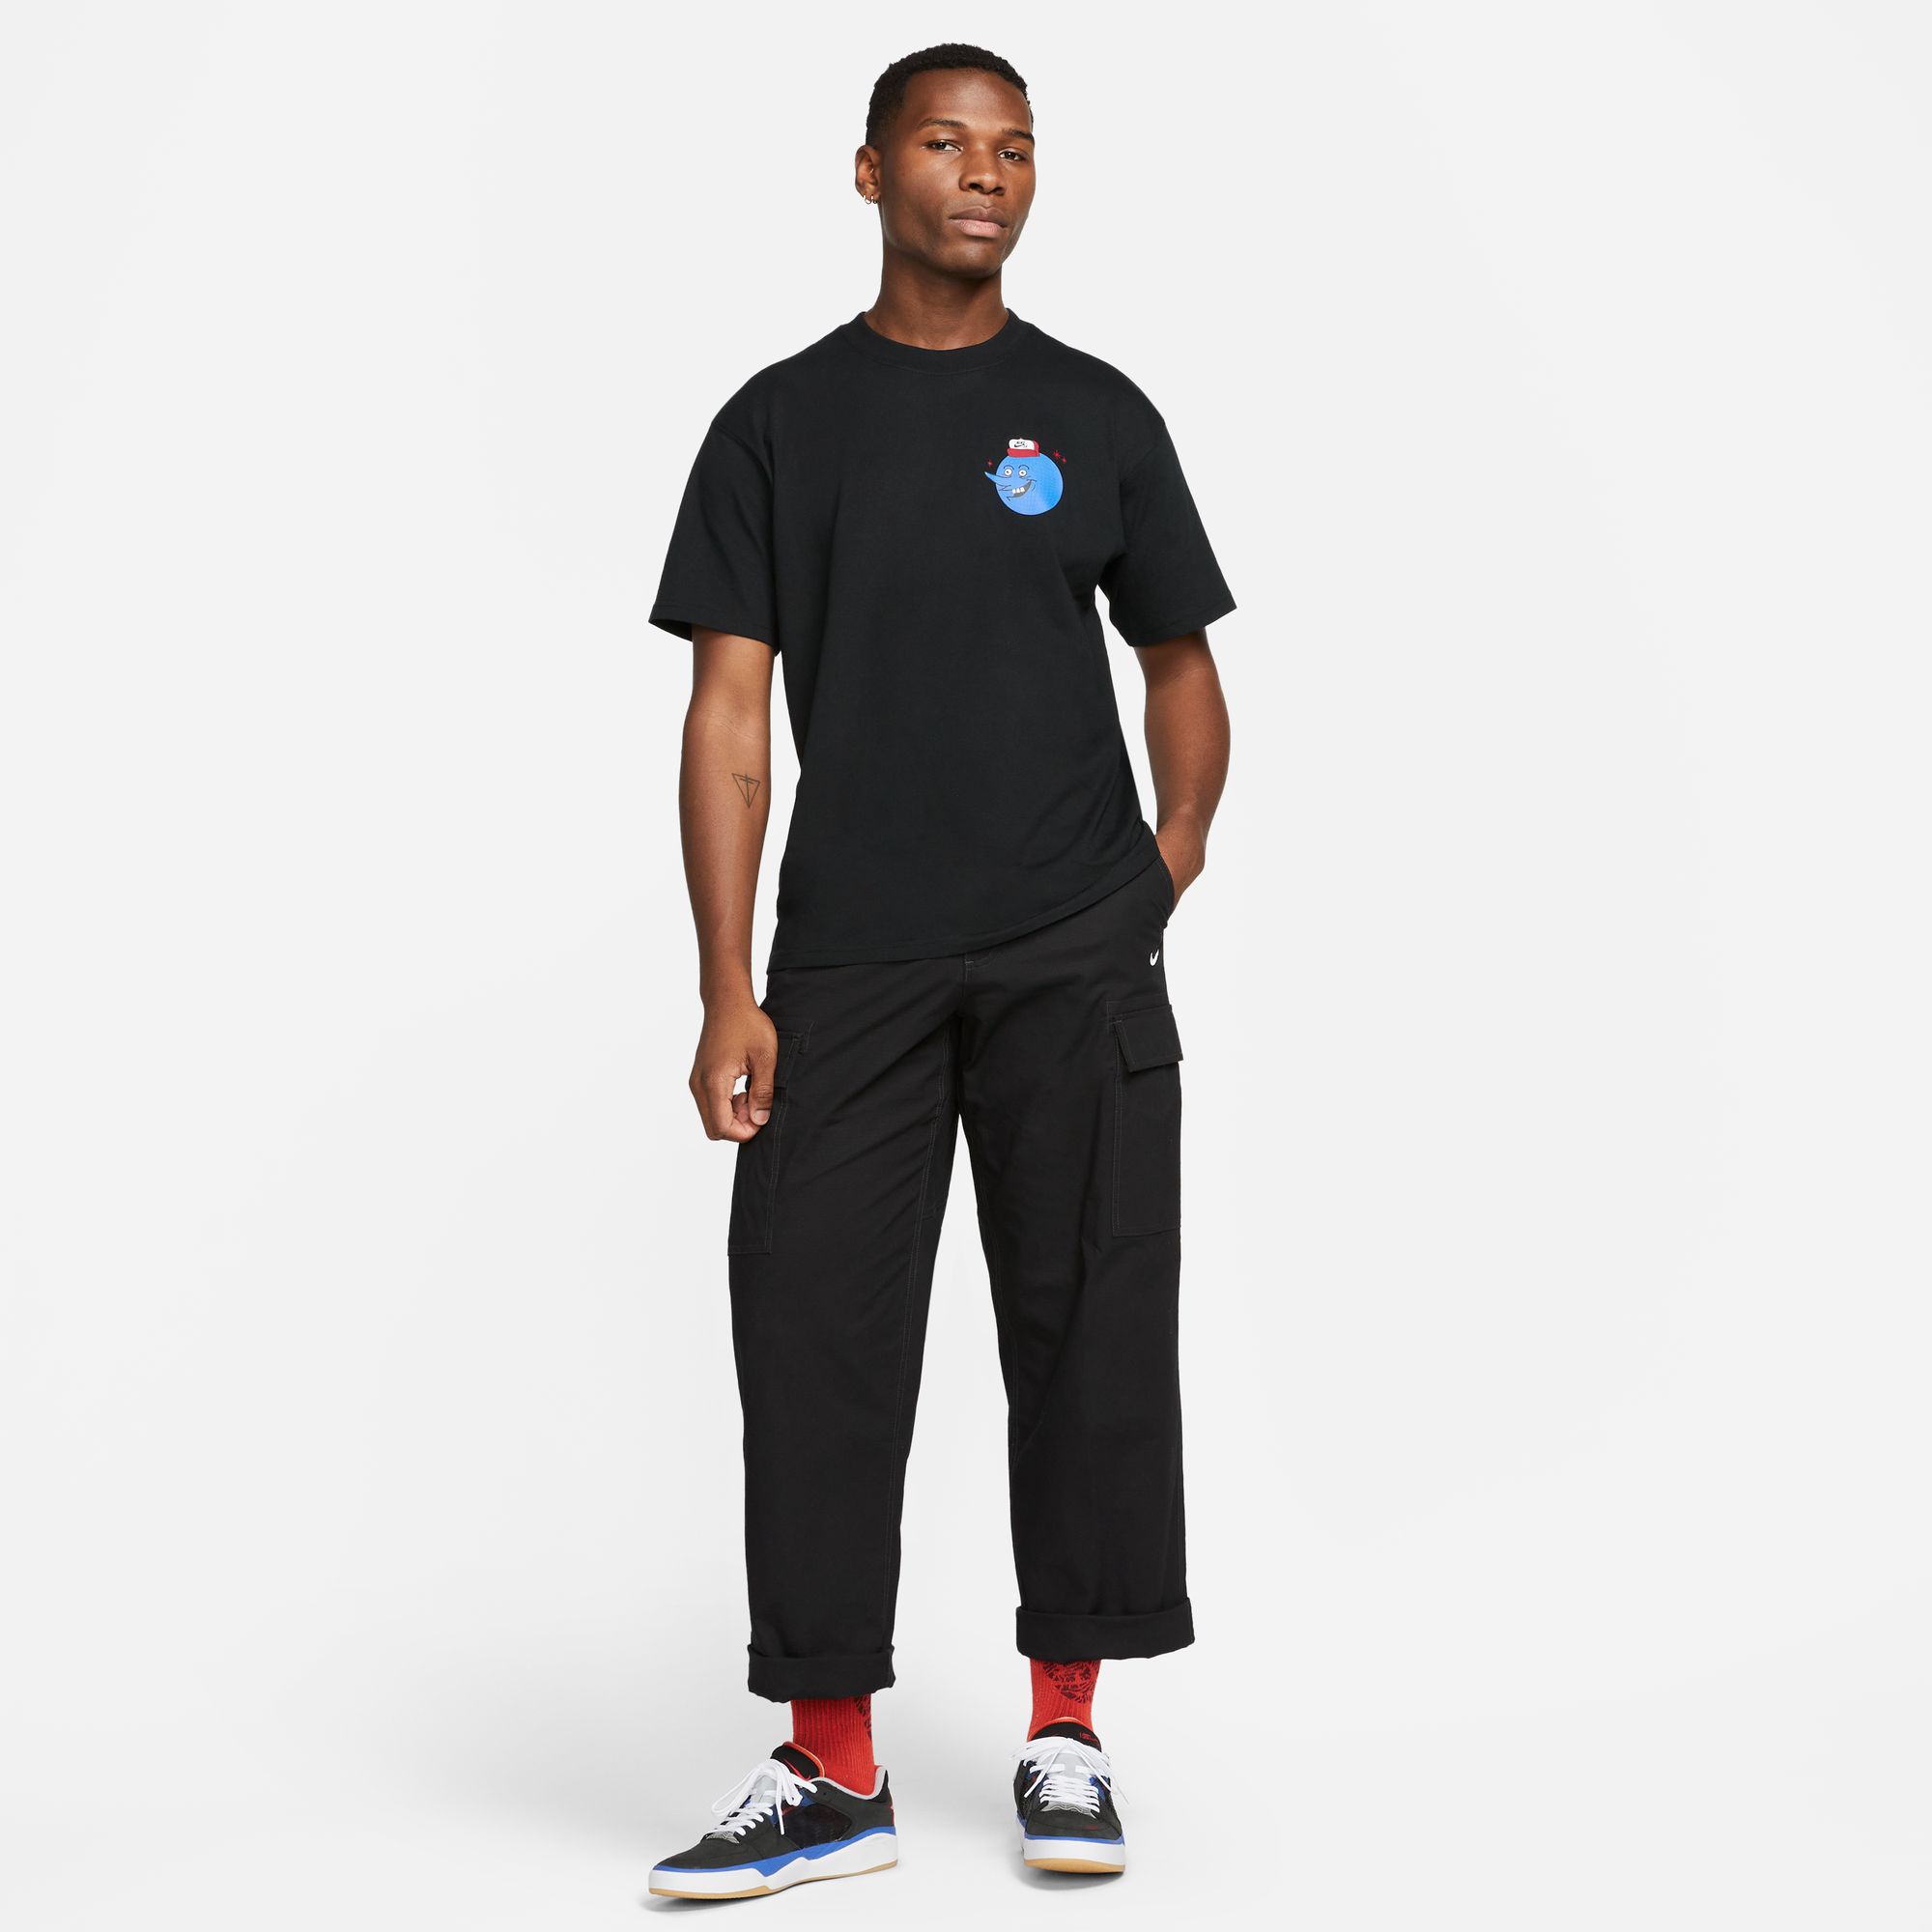 Nike SB Men's Skate T-Shirt Just Be Here Black 06